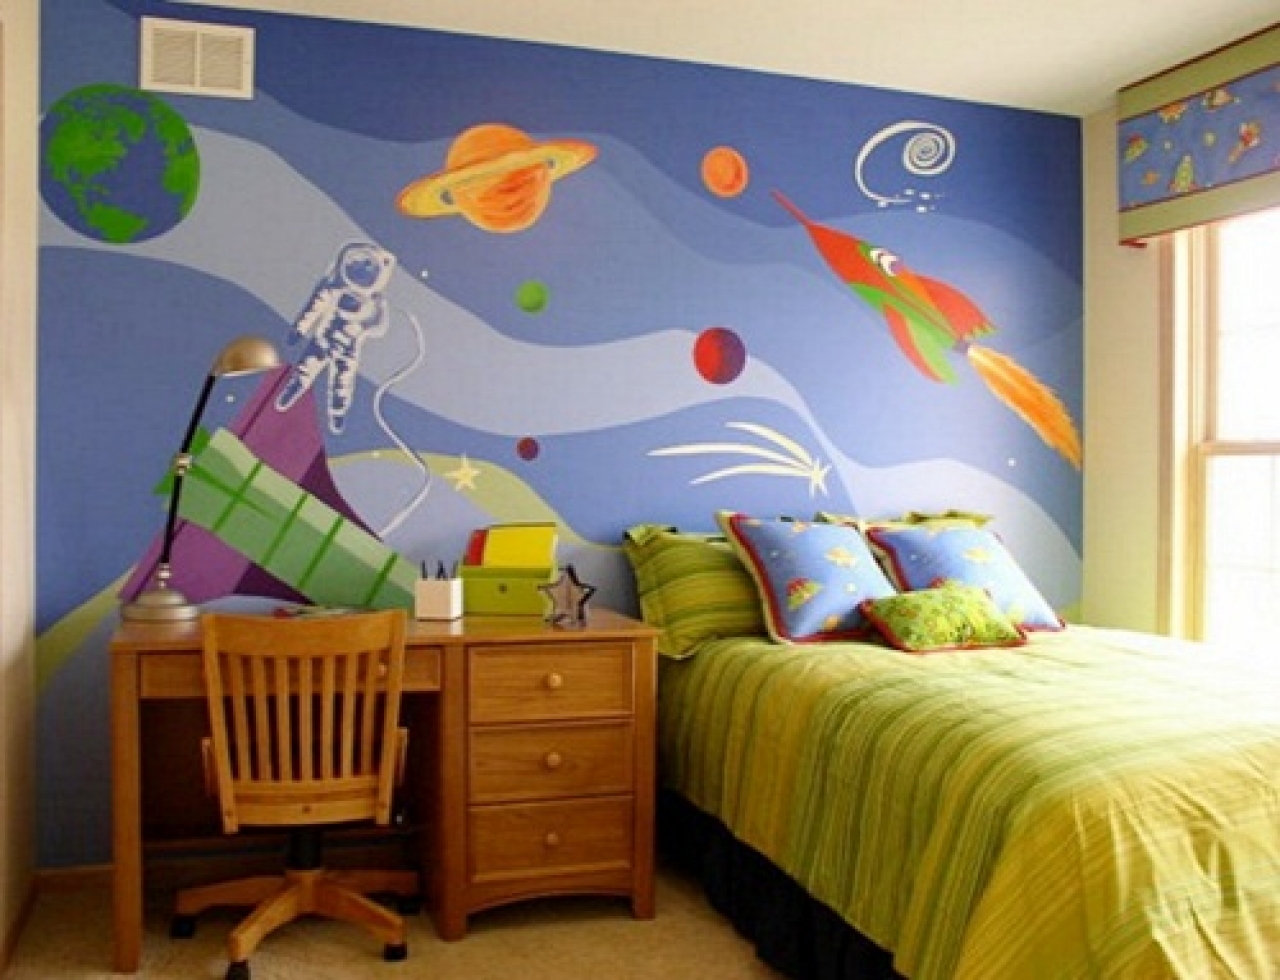 Kids Room Wallpaper Ideas Cosmic By Homecaprice